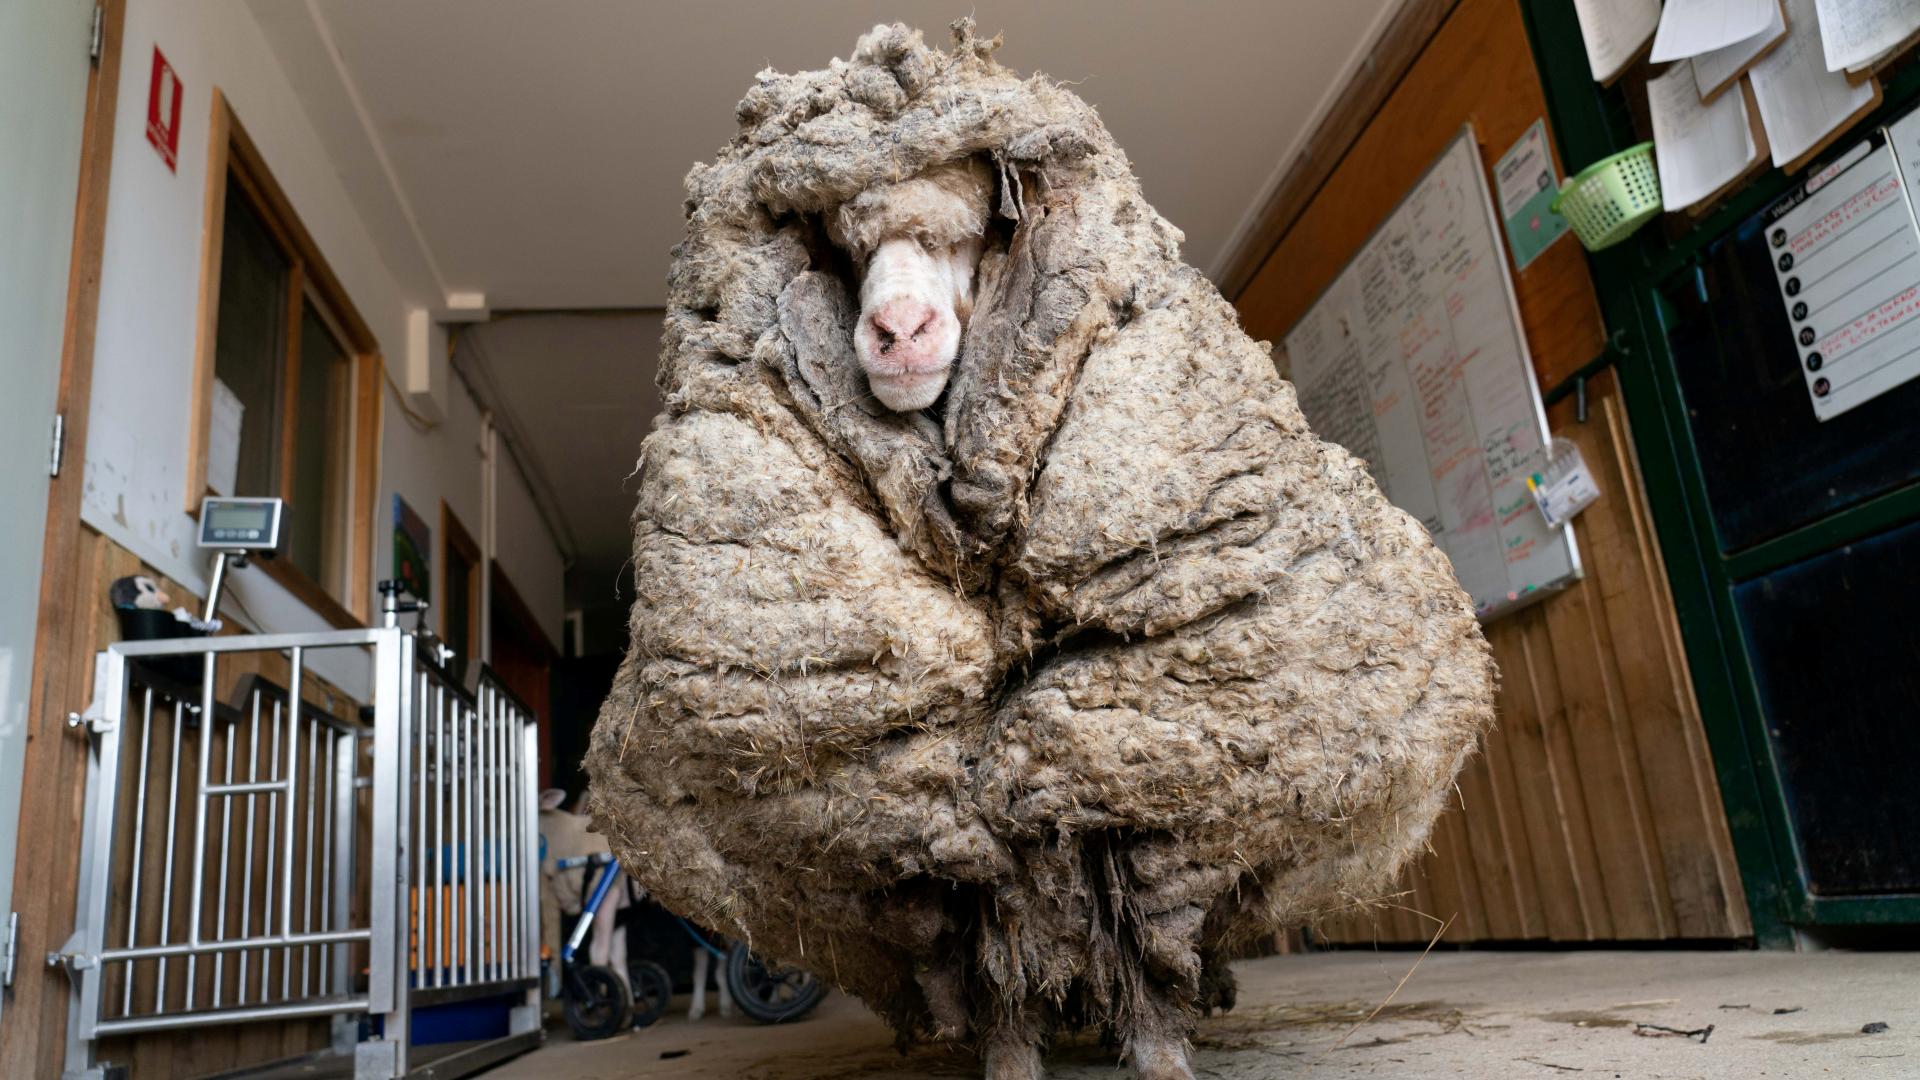 Así es Baarack, la oveja 'fugitiva' con 35 kilos de lana